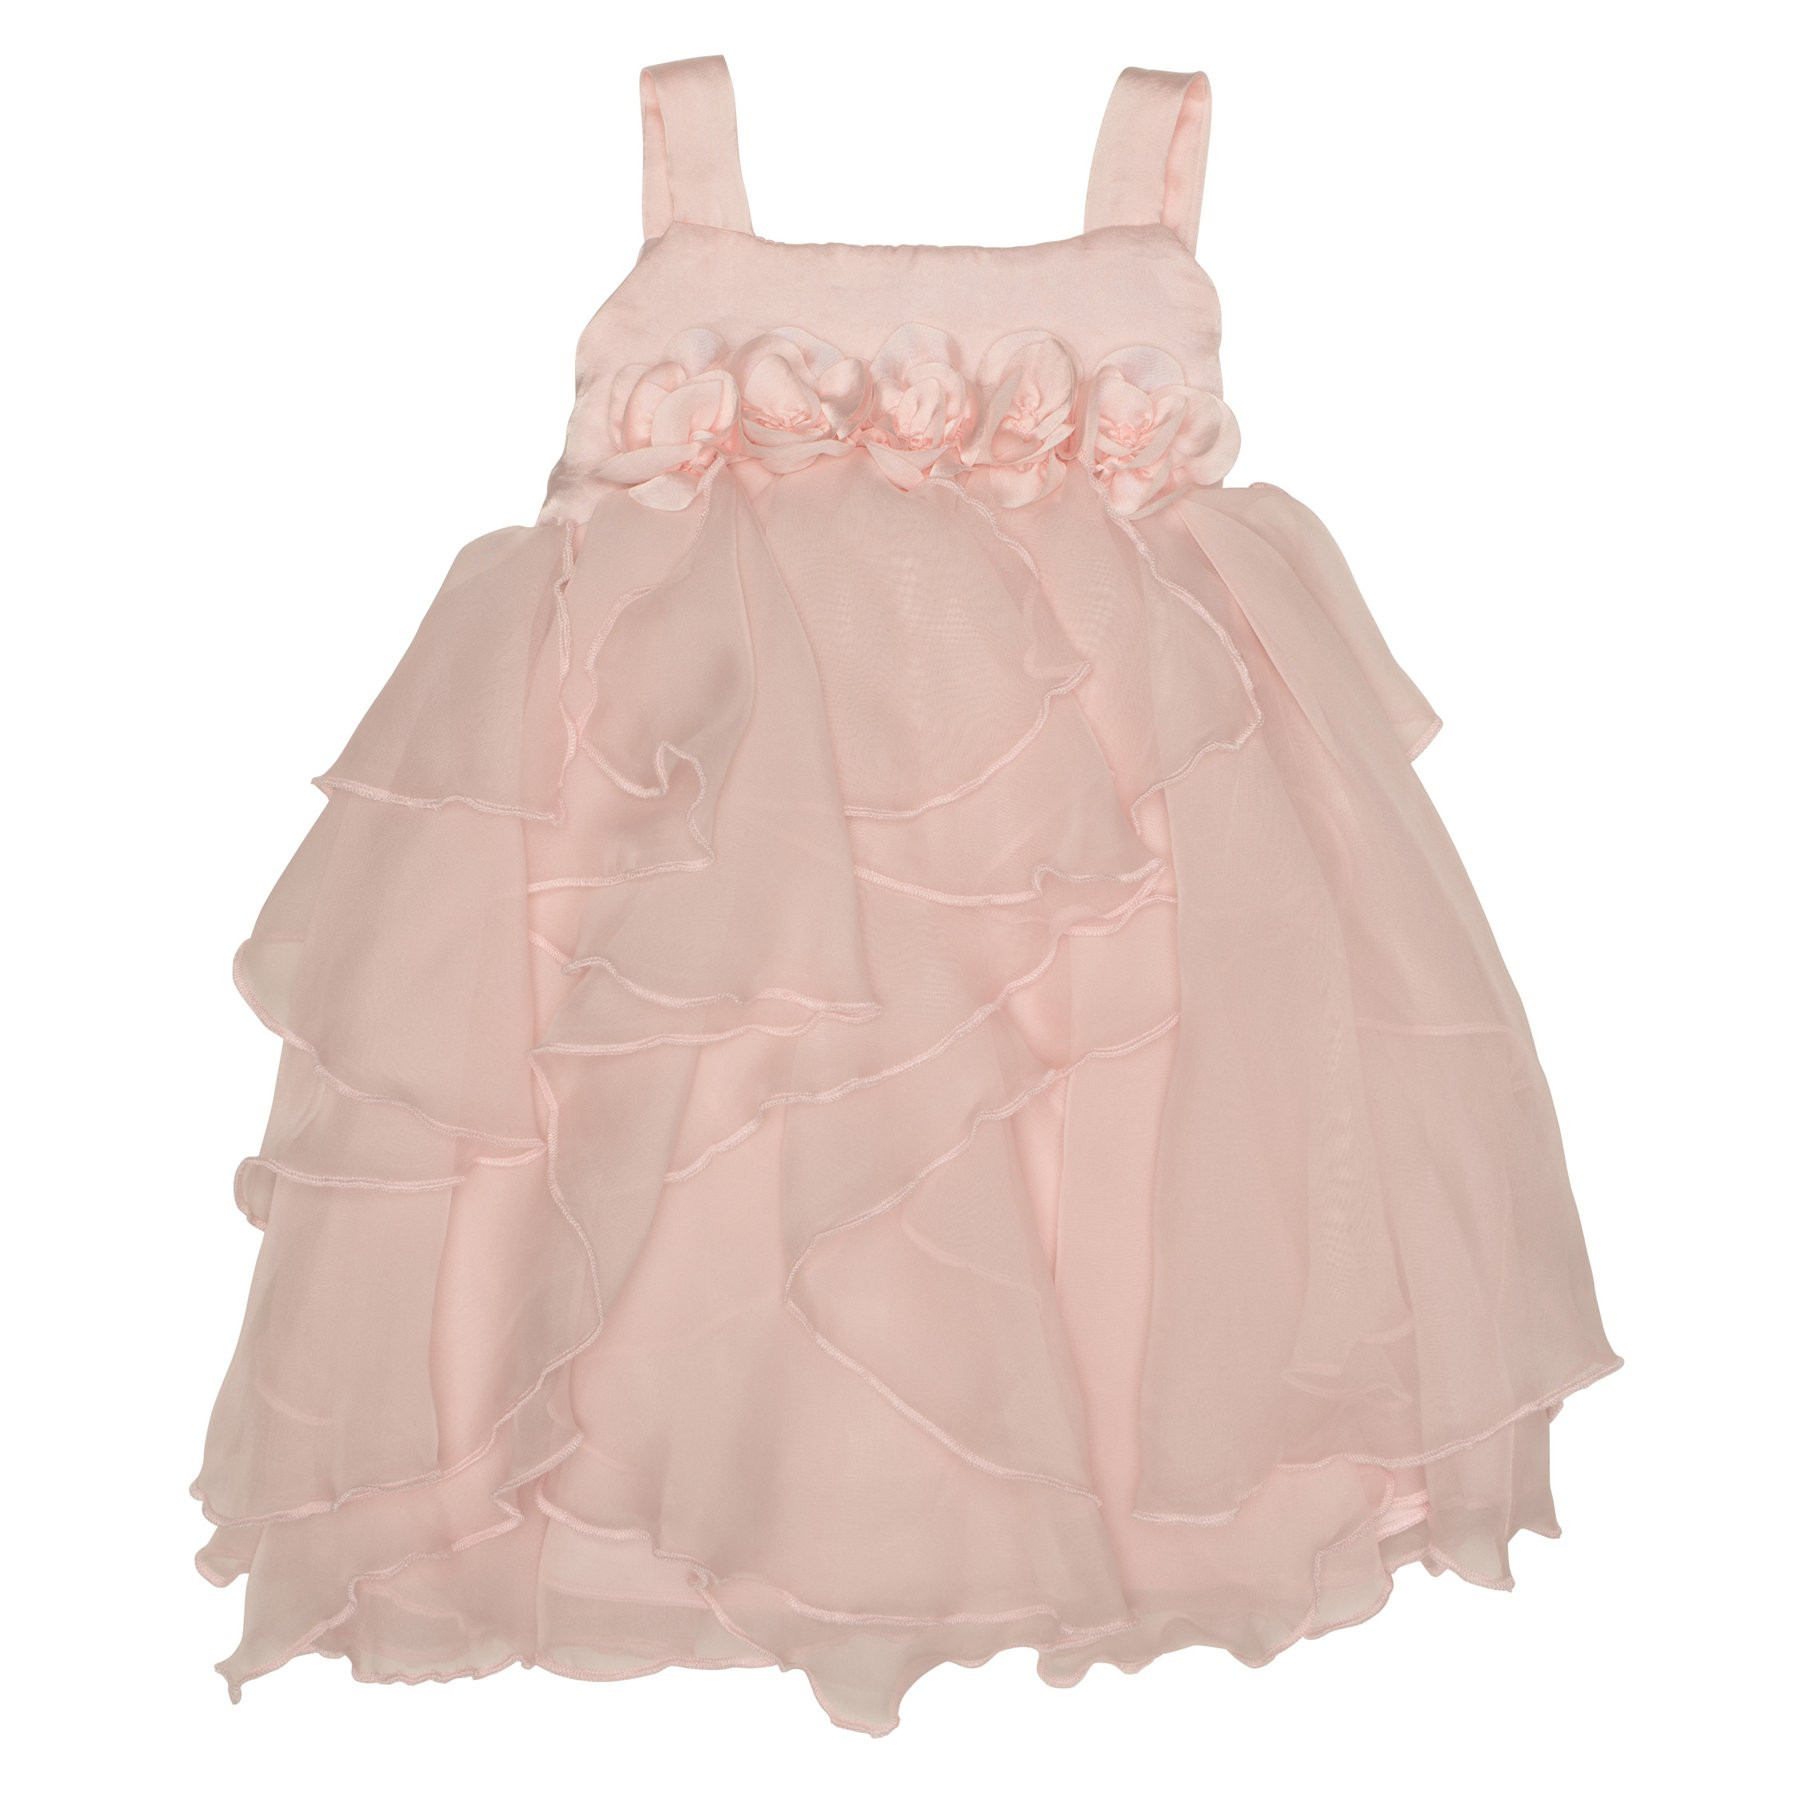 Biscotti Baby Dress
 Baby Biscotti Blushing Princess Dress